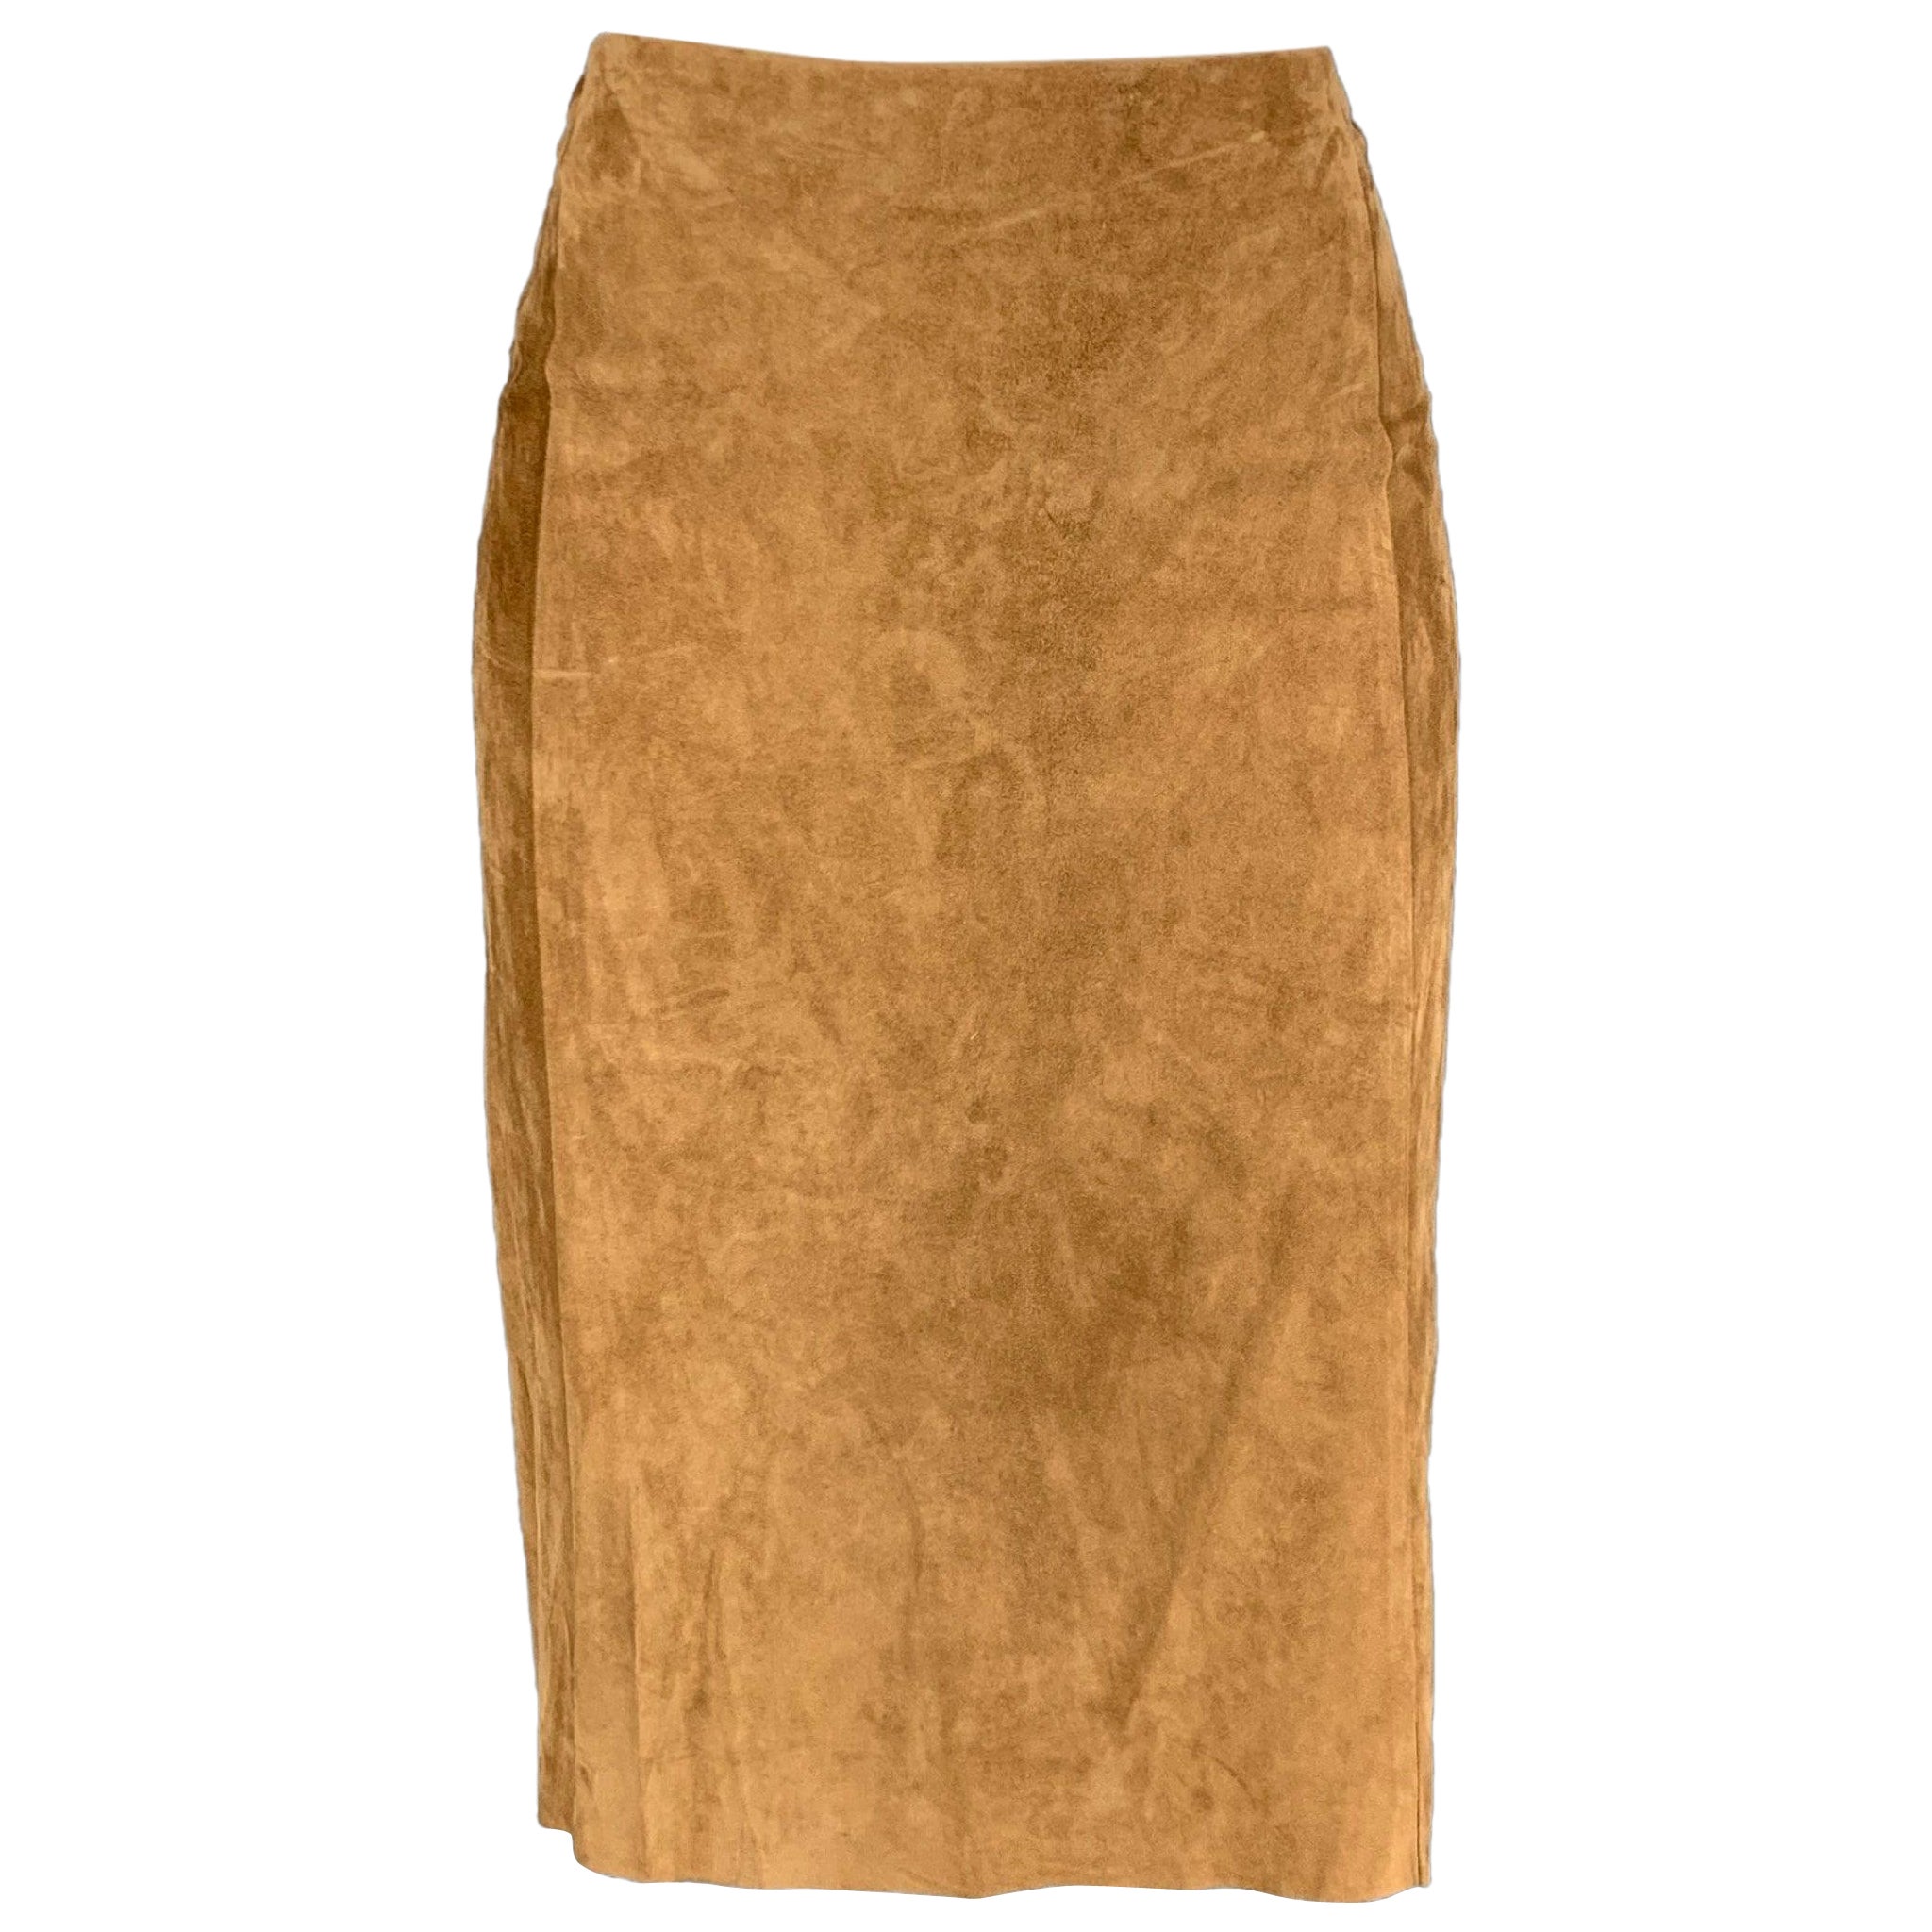 RALPH LAUREN Collection Size 6 Tan Suede  Pencil Below Knee Skirt For Sale